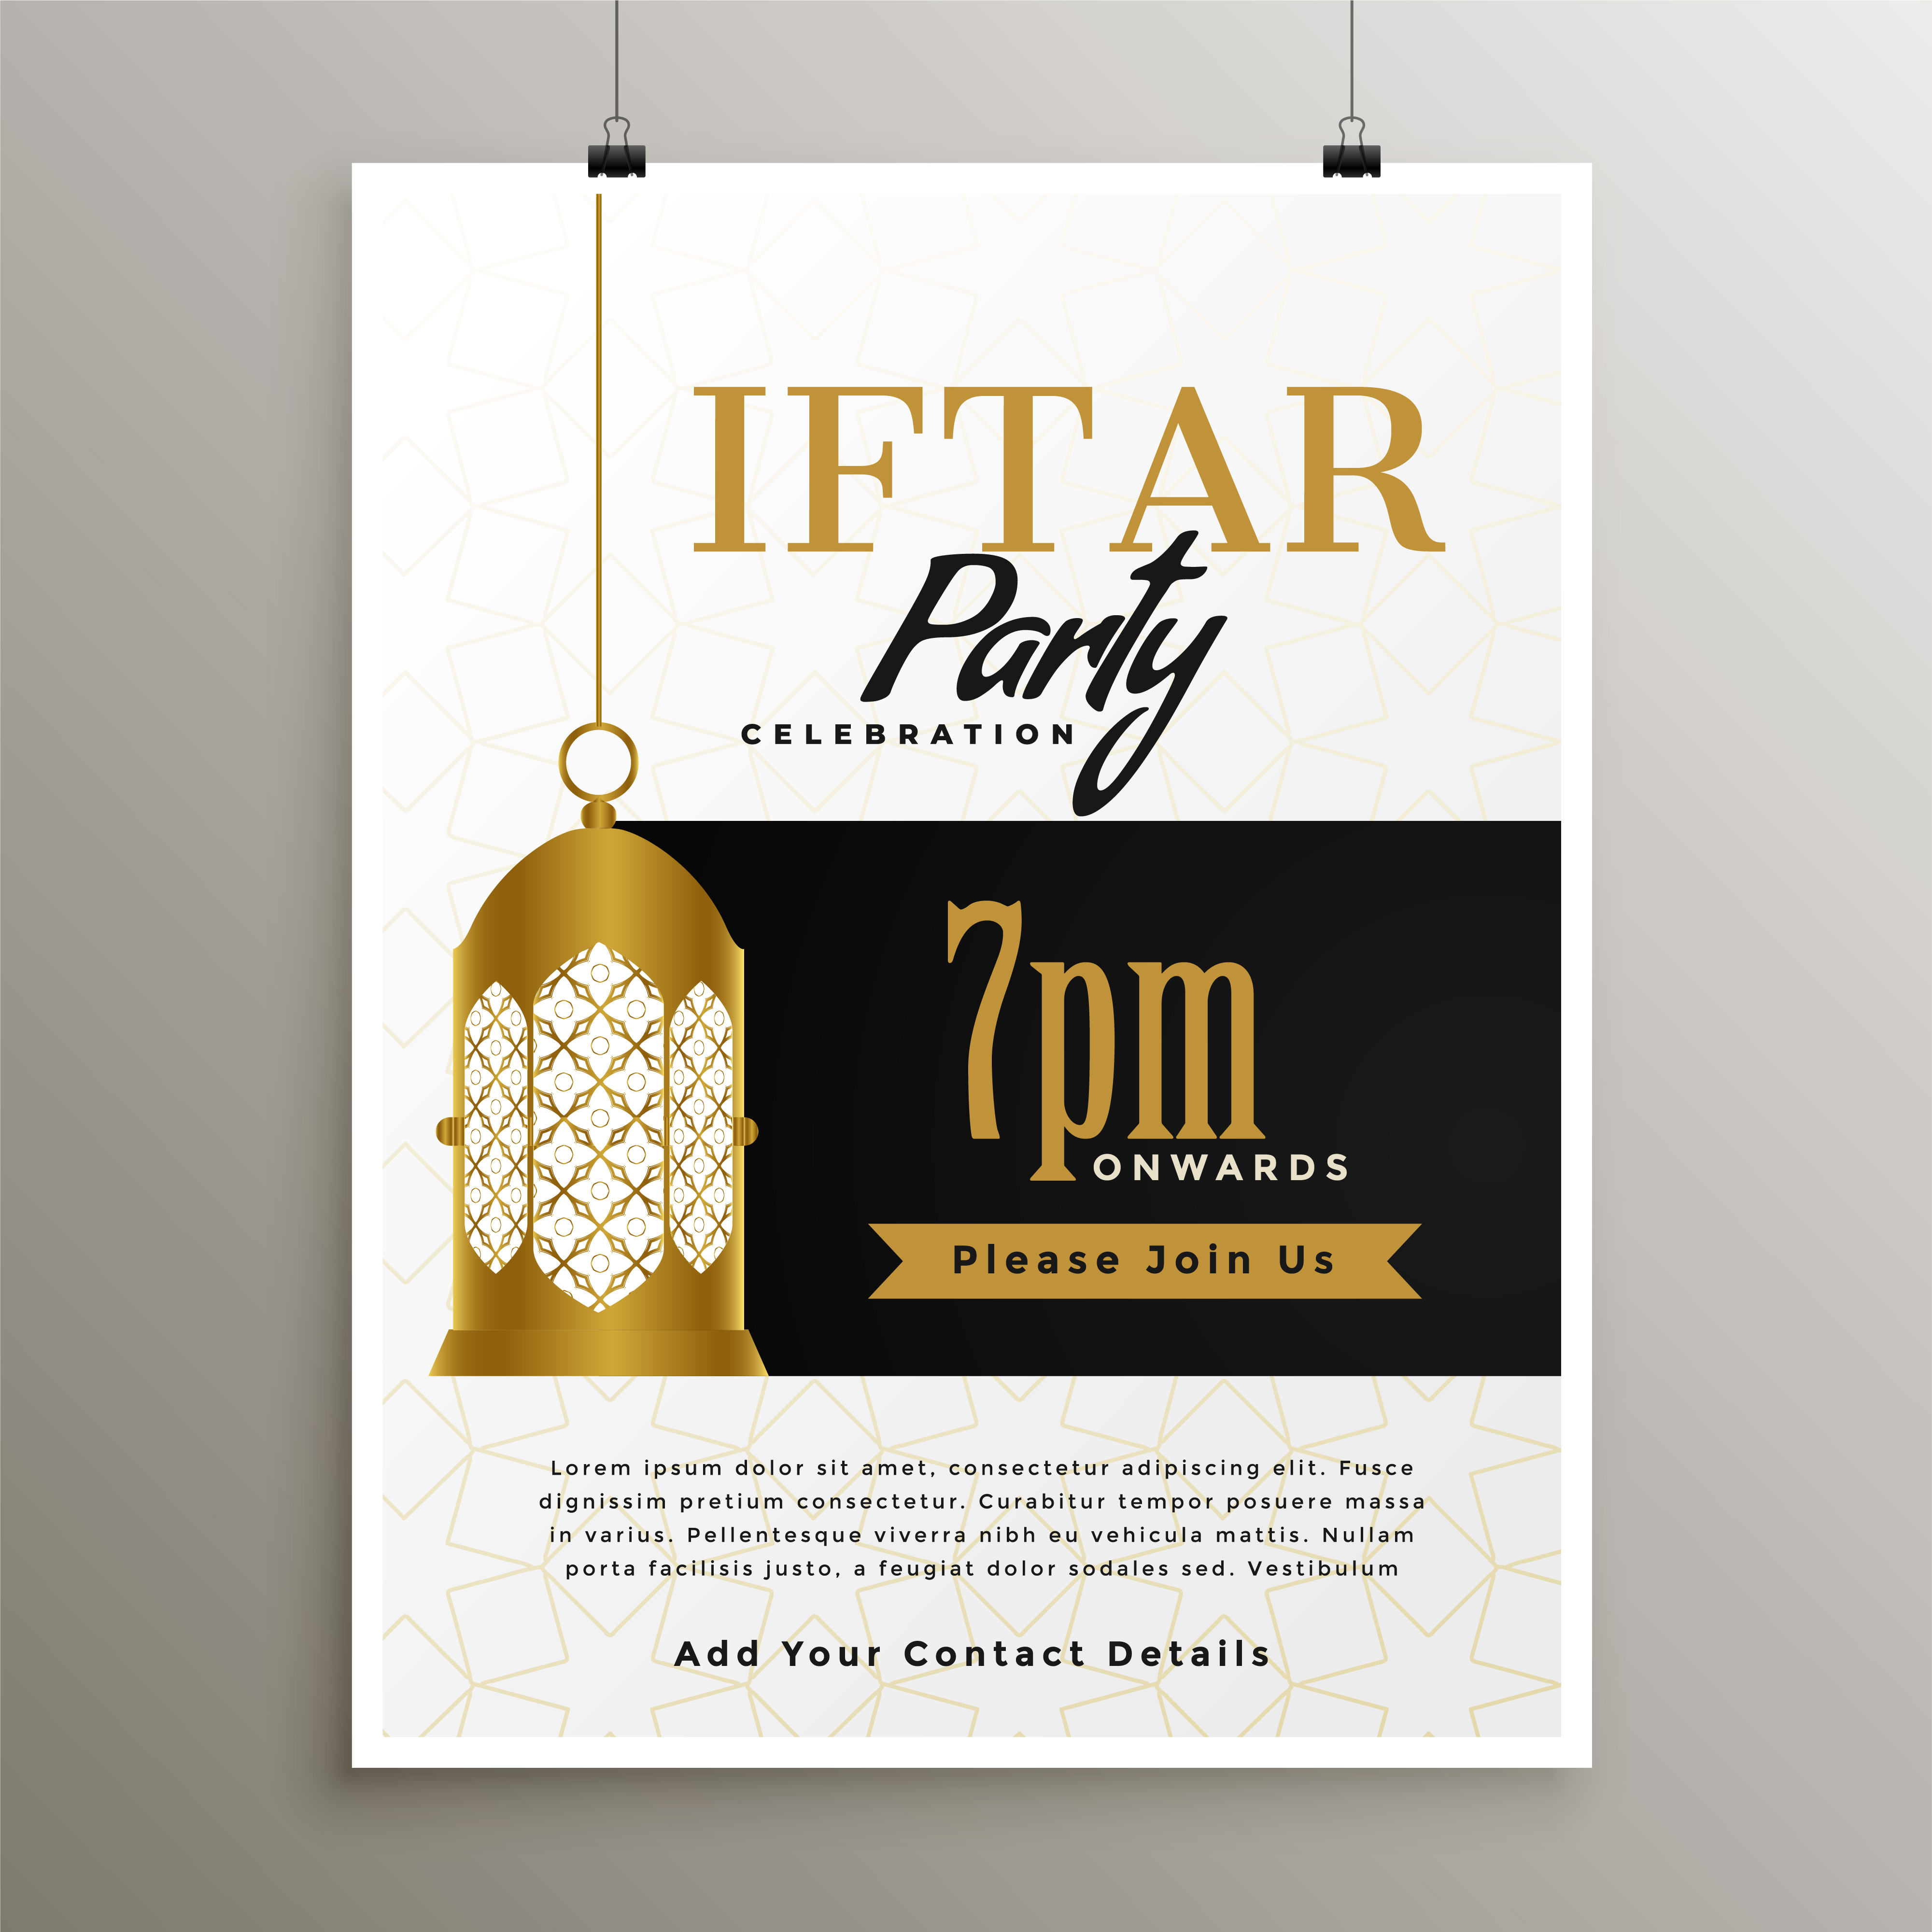 Ramadan Iftar Party Celebration Stylish Template Download Free Vector